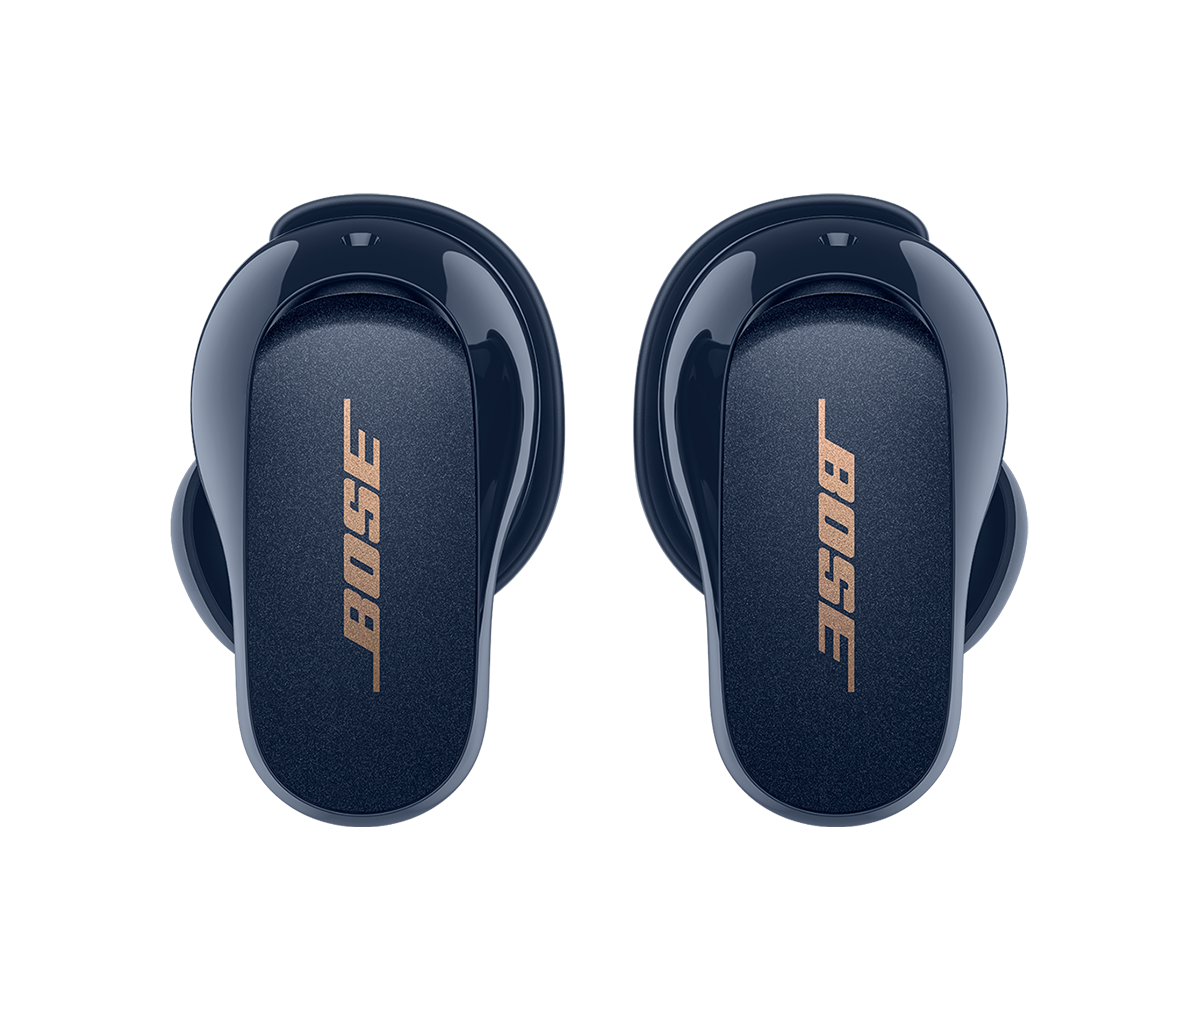 Bose QuietComfort Earbuds II – Refurbished Midnight Blue